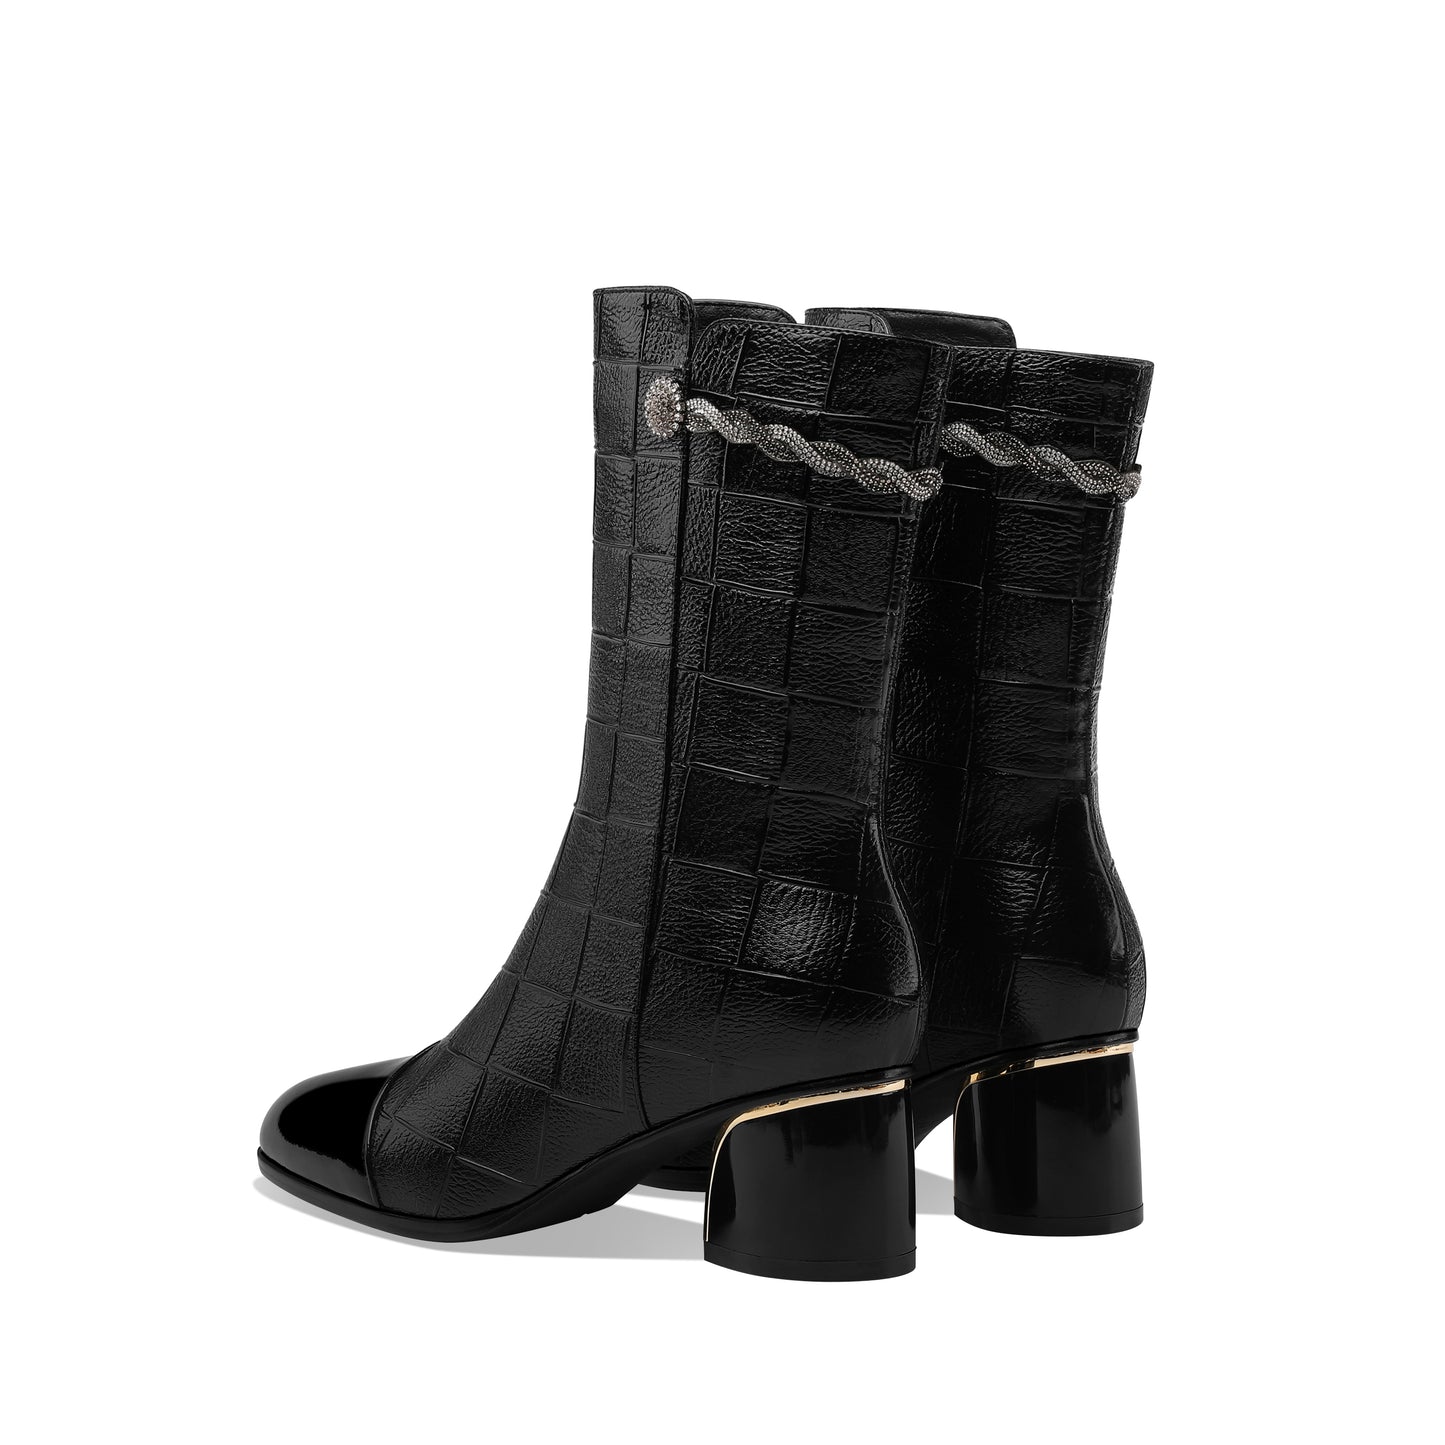 TinaCus Women's Handmade Leather Side Zip Up Rhinestone Decor Chunky Heel Mid-Calf Boots with Glossy Cap-Toe